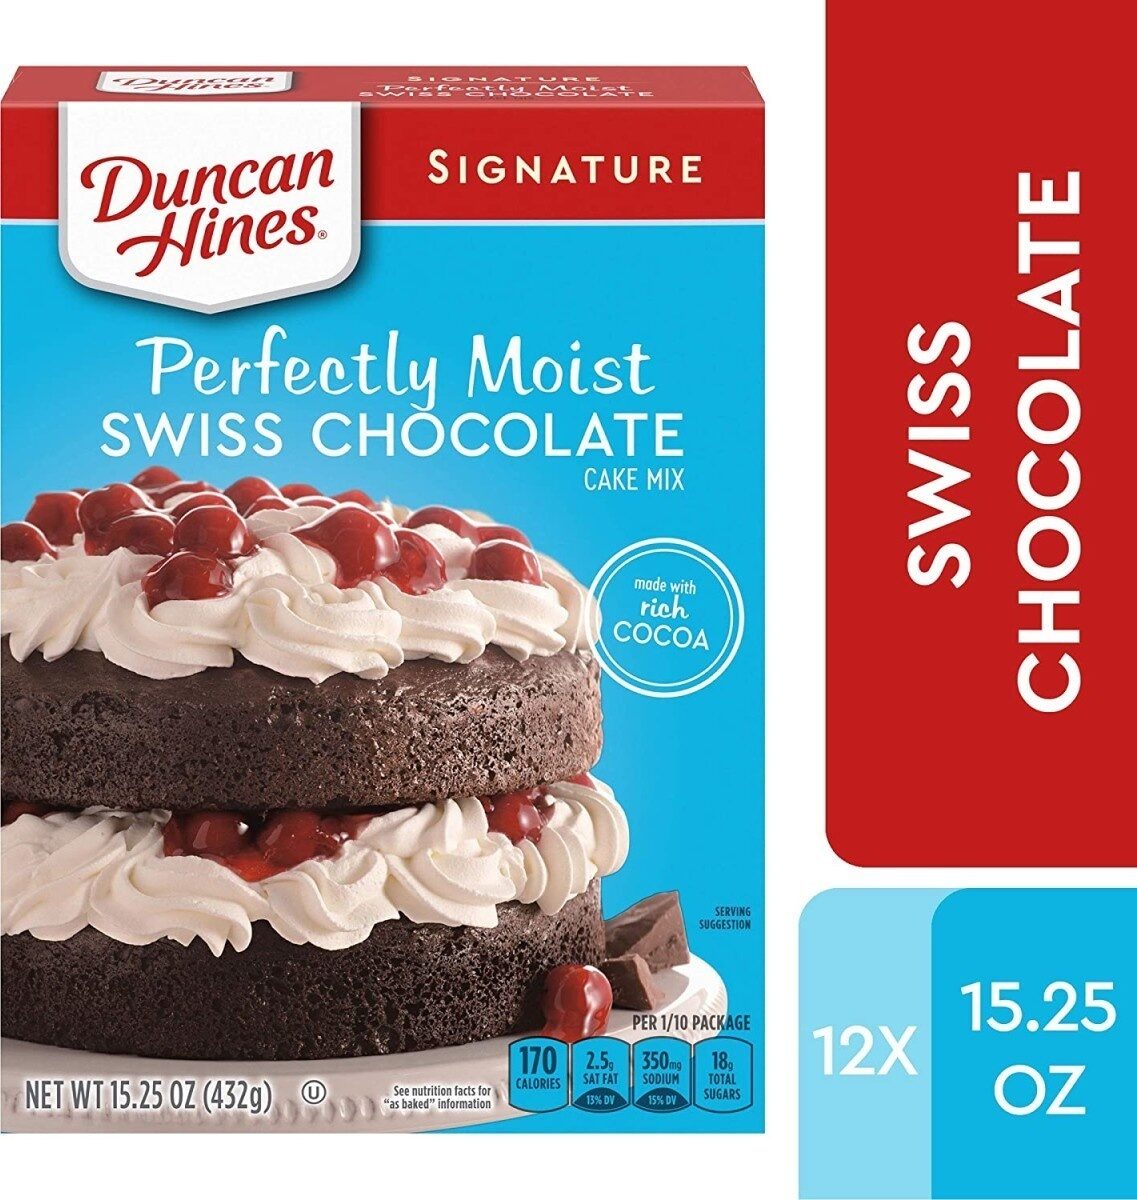 Signature perfectly moist swiss chocolate cake mix - Producto